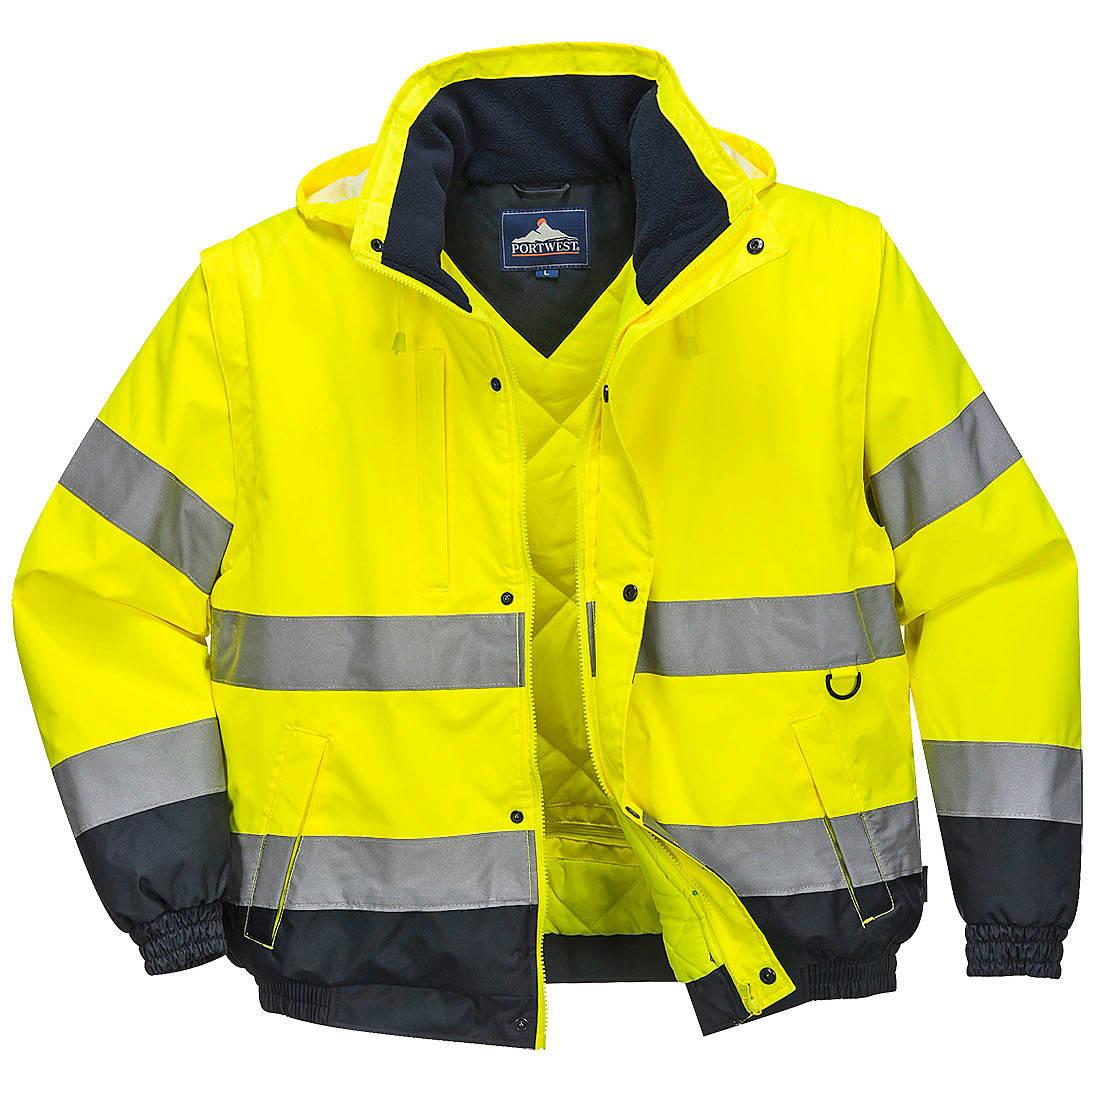 Portwest Hi-Viz 2-in-1 Jacket in Yellow (Product Code: C468)